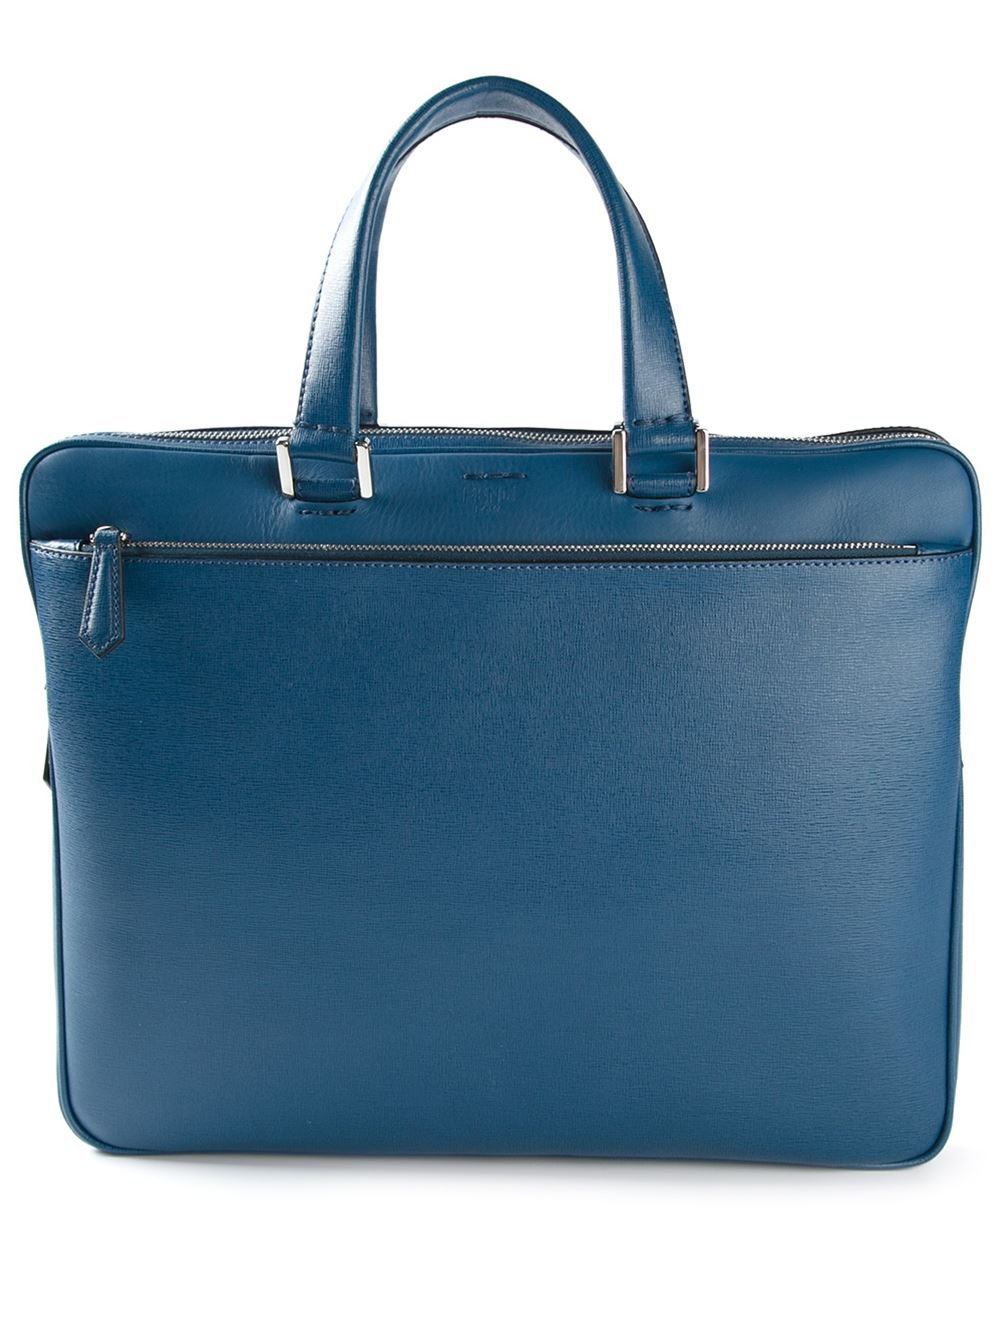 Lyst - Fendi 'Business' Briefcase in Blue for Men